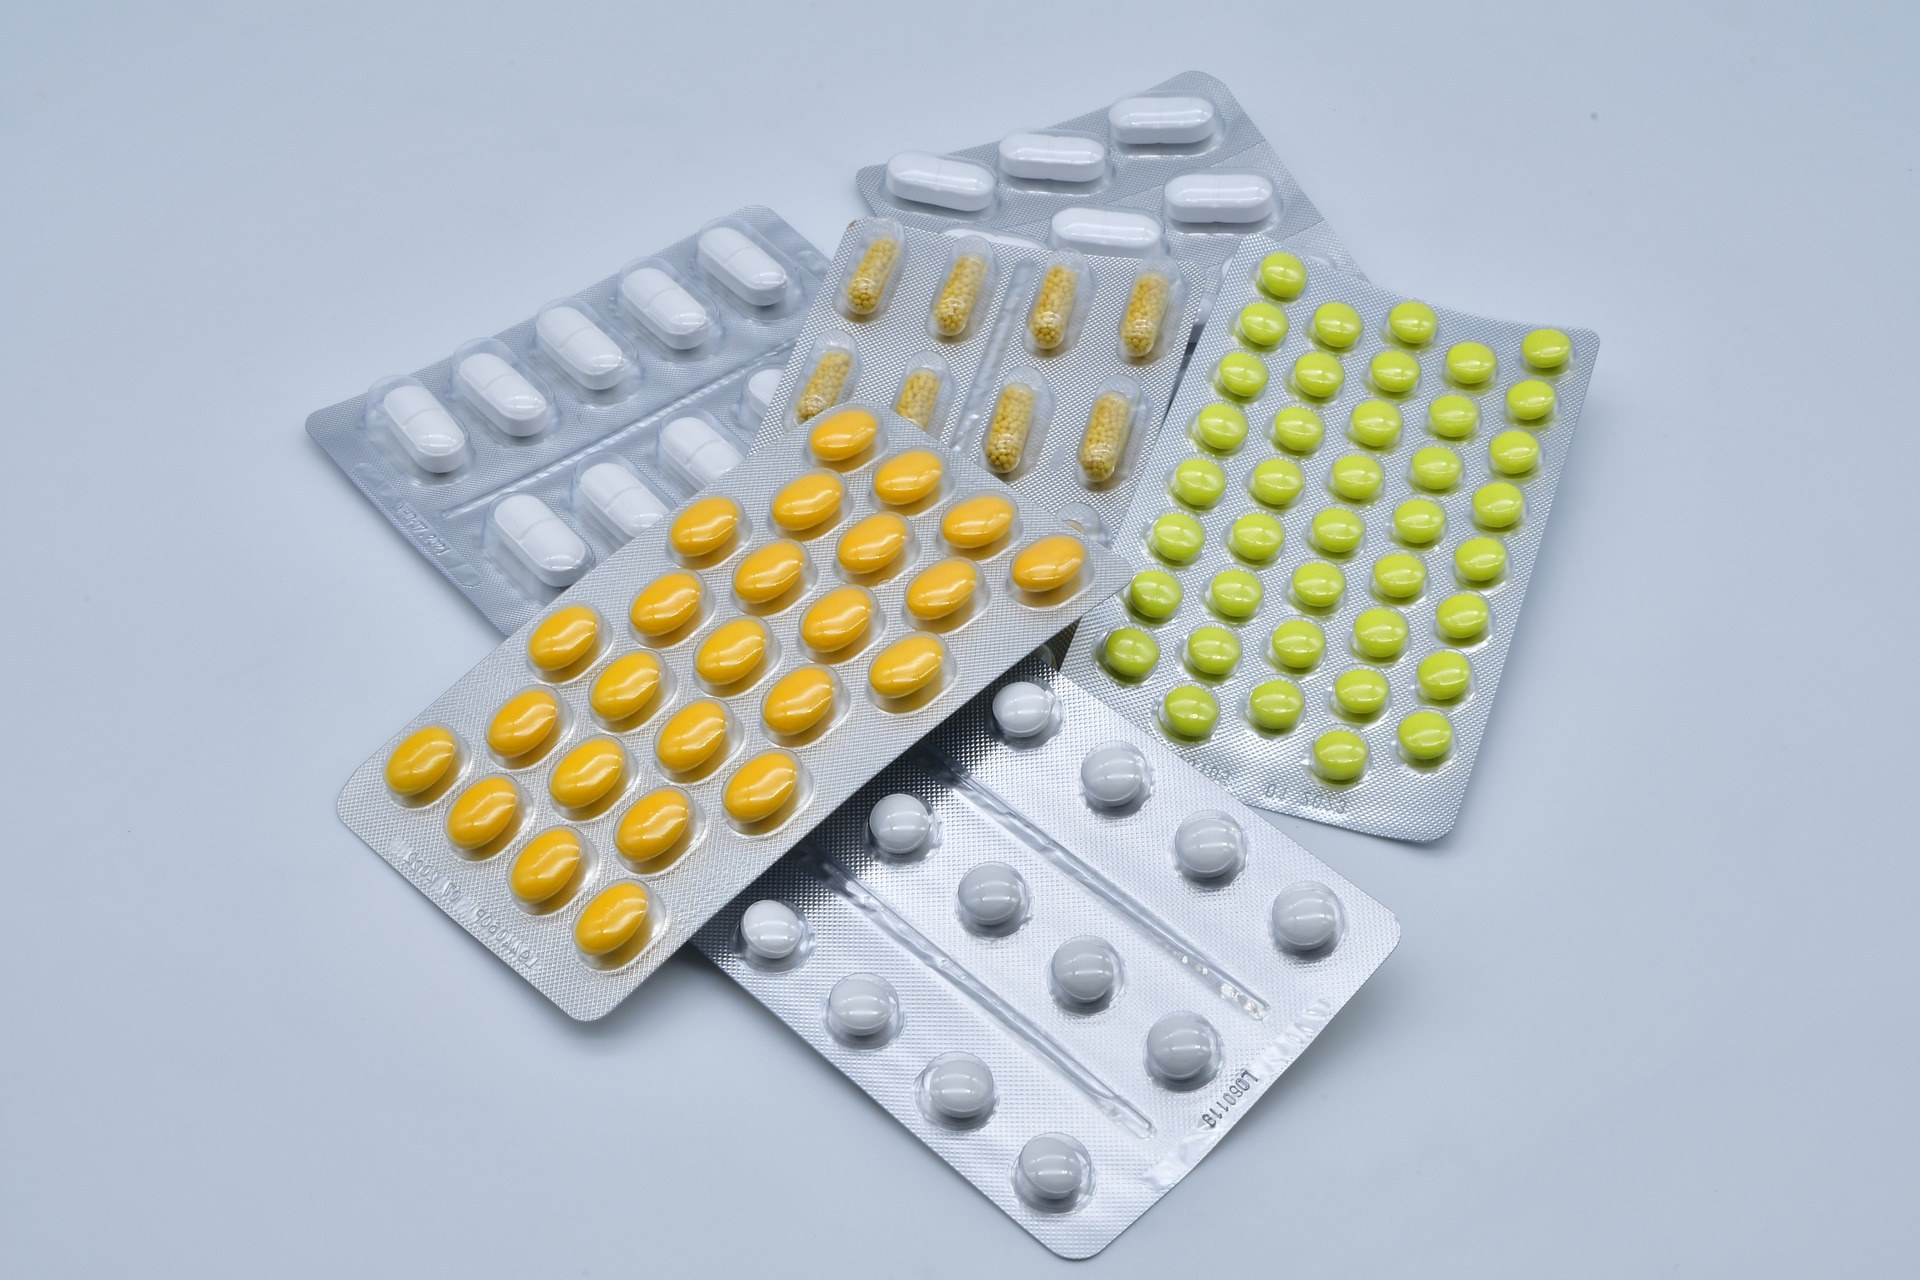 Phama pills fmd compliance coding uk nhs legal